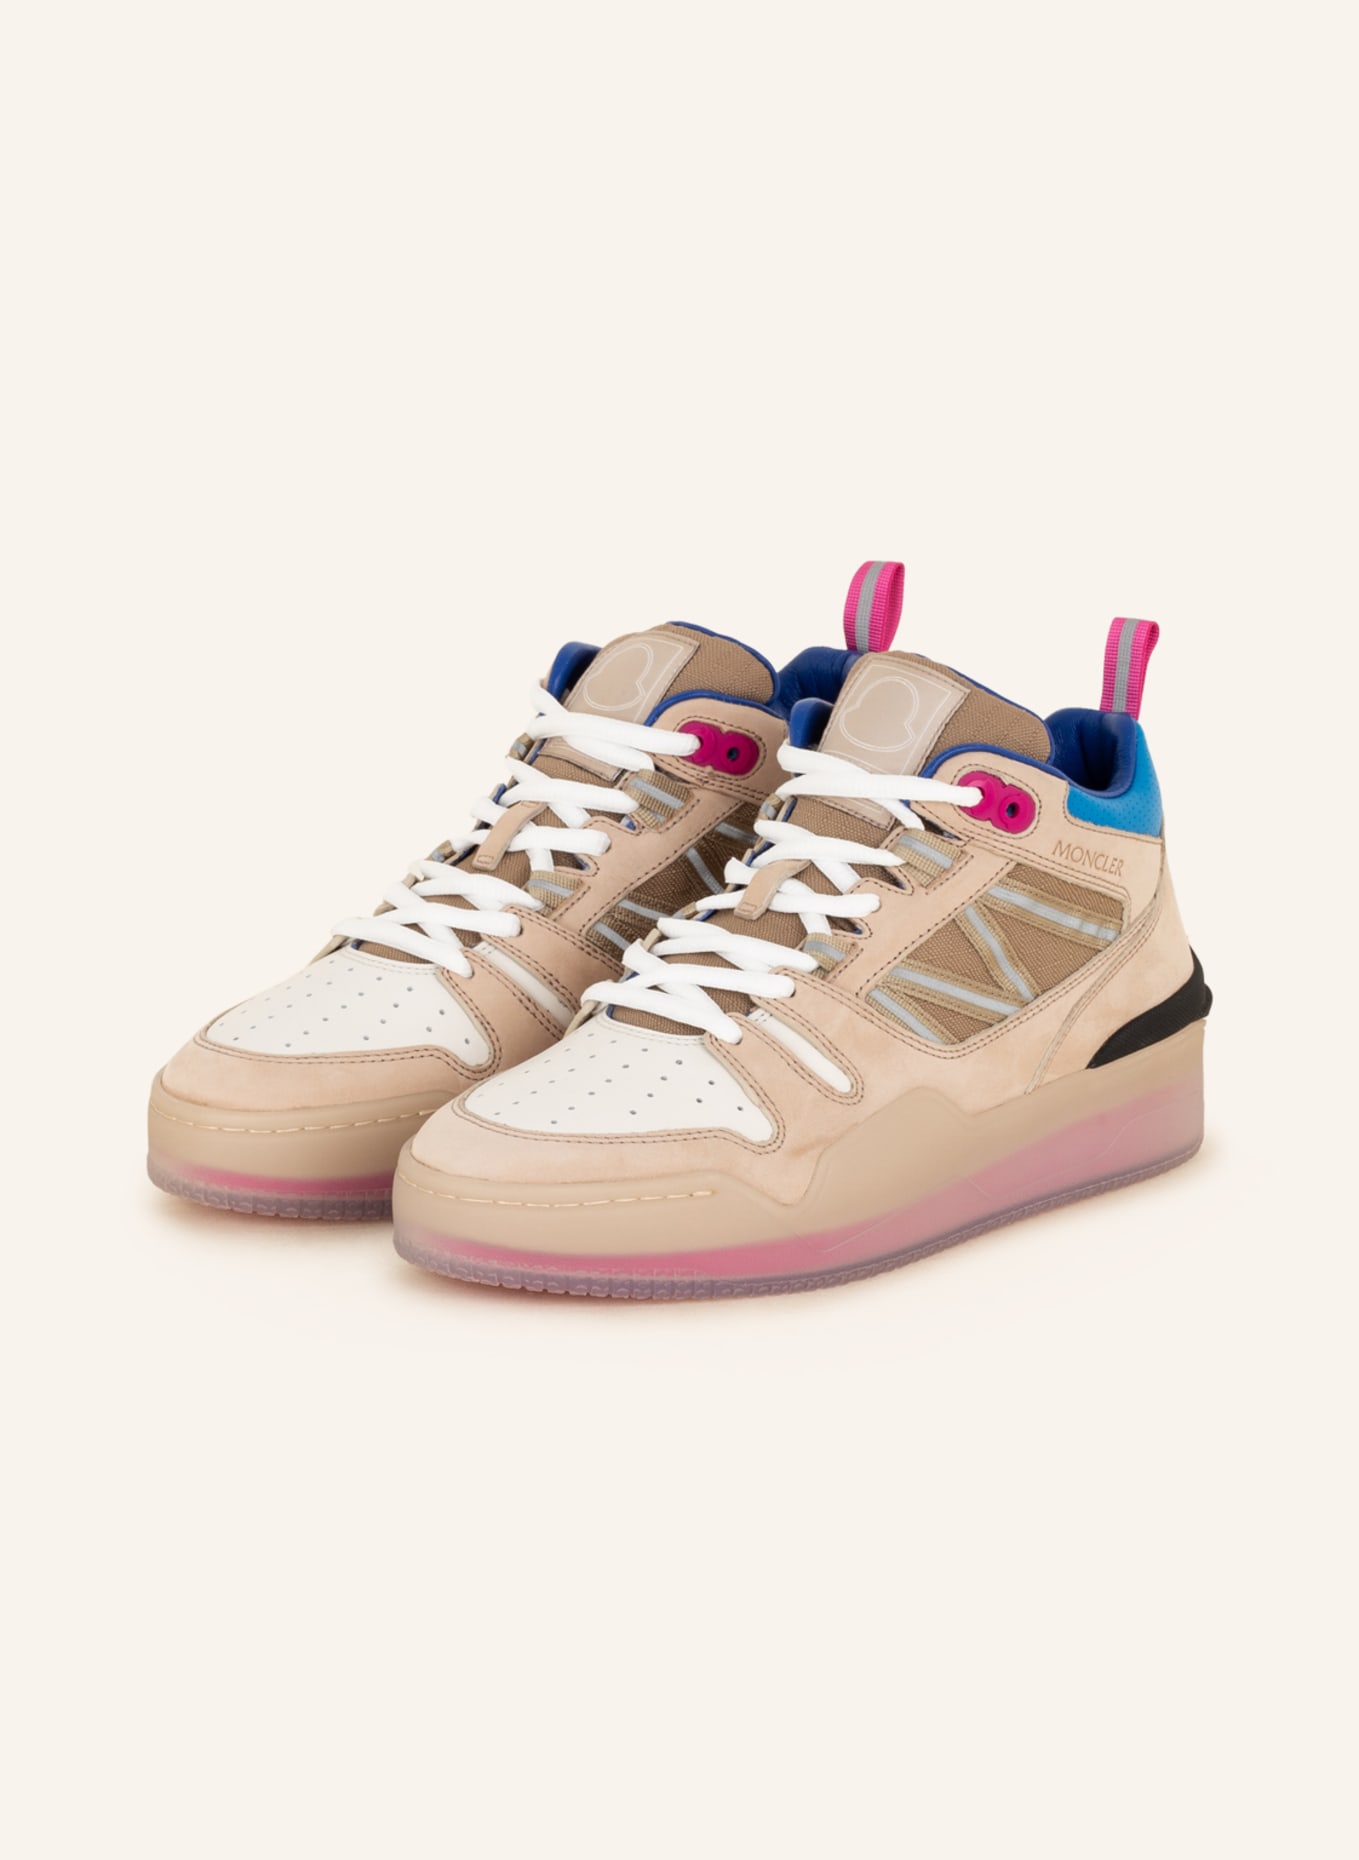 MONCLER Hightop-Sneaker PIVOT, Farbe: BEIGE/ BLAU/ PINK (Bild 1)